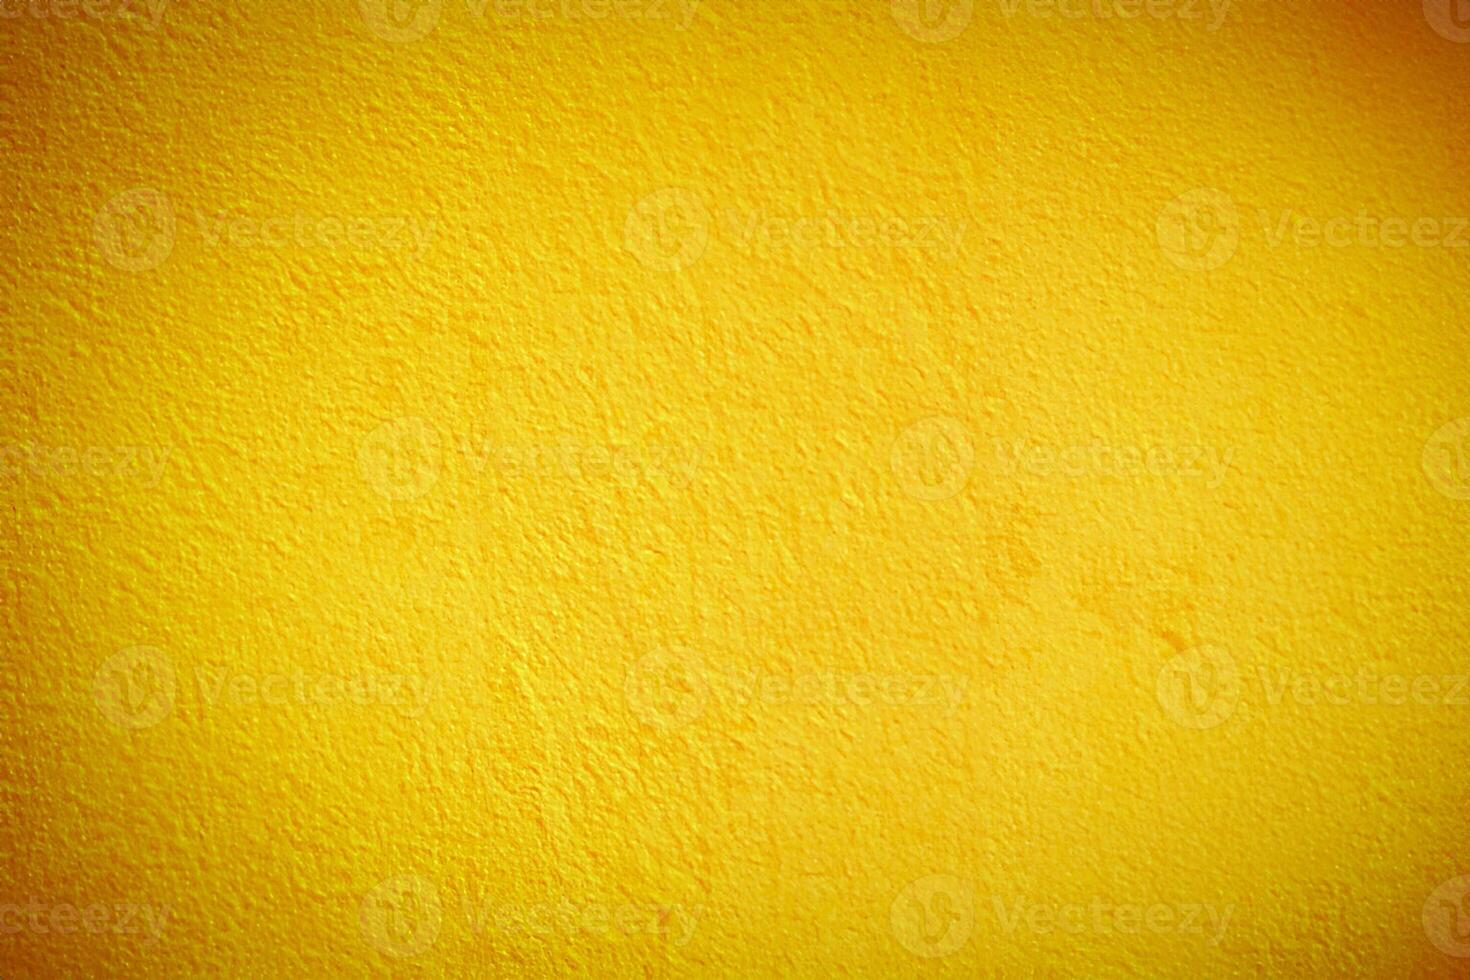 vibrante amarelo cimento parede textura, perfeito fundo para Projeto projetos. foto